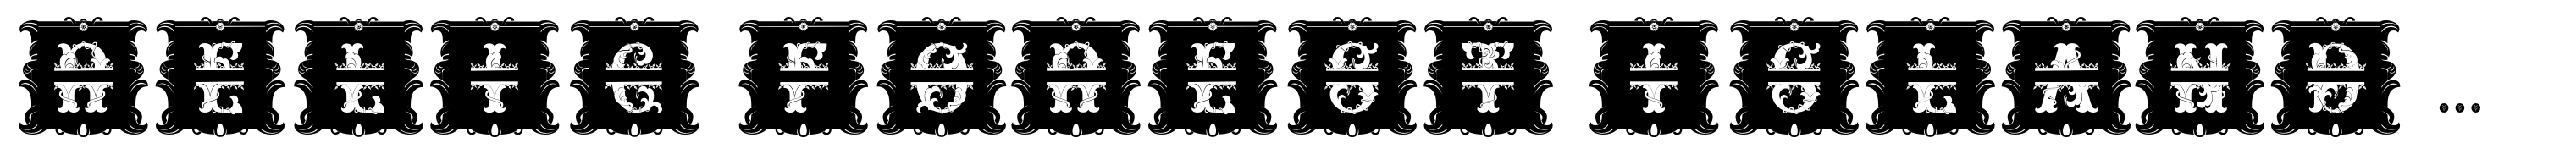 Relic Forest Island 3 Monogram frame combination